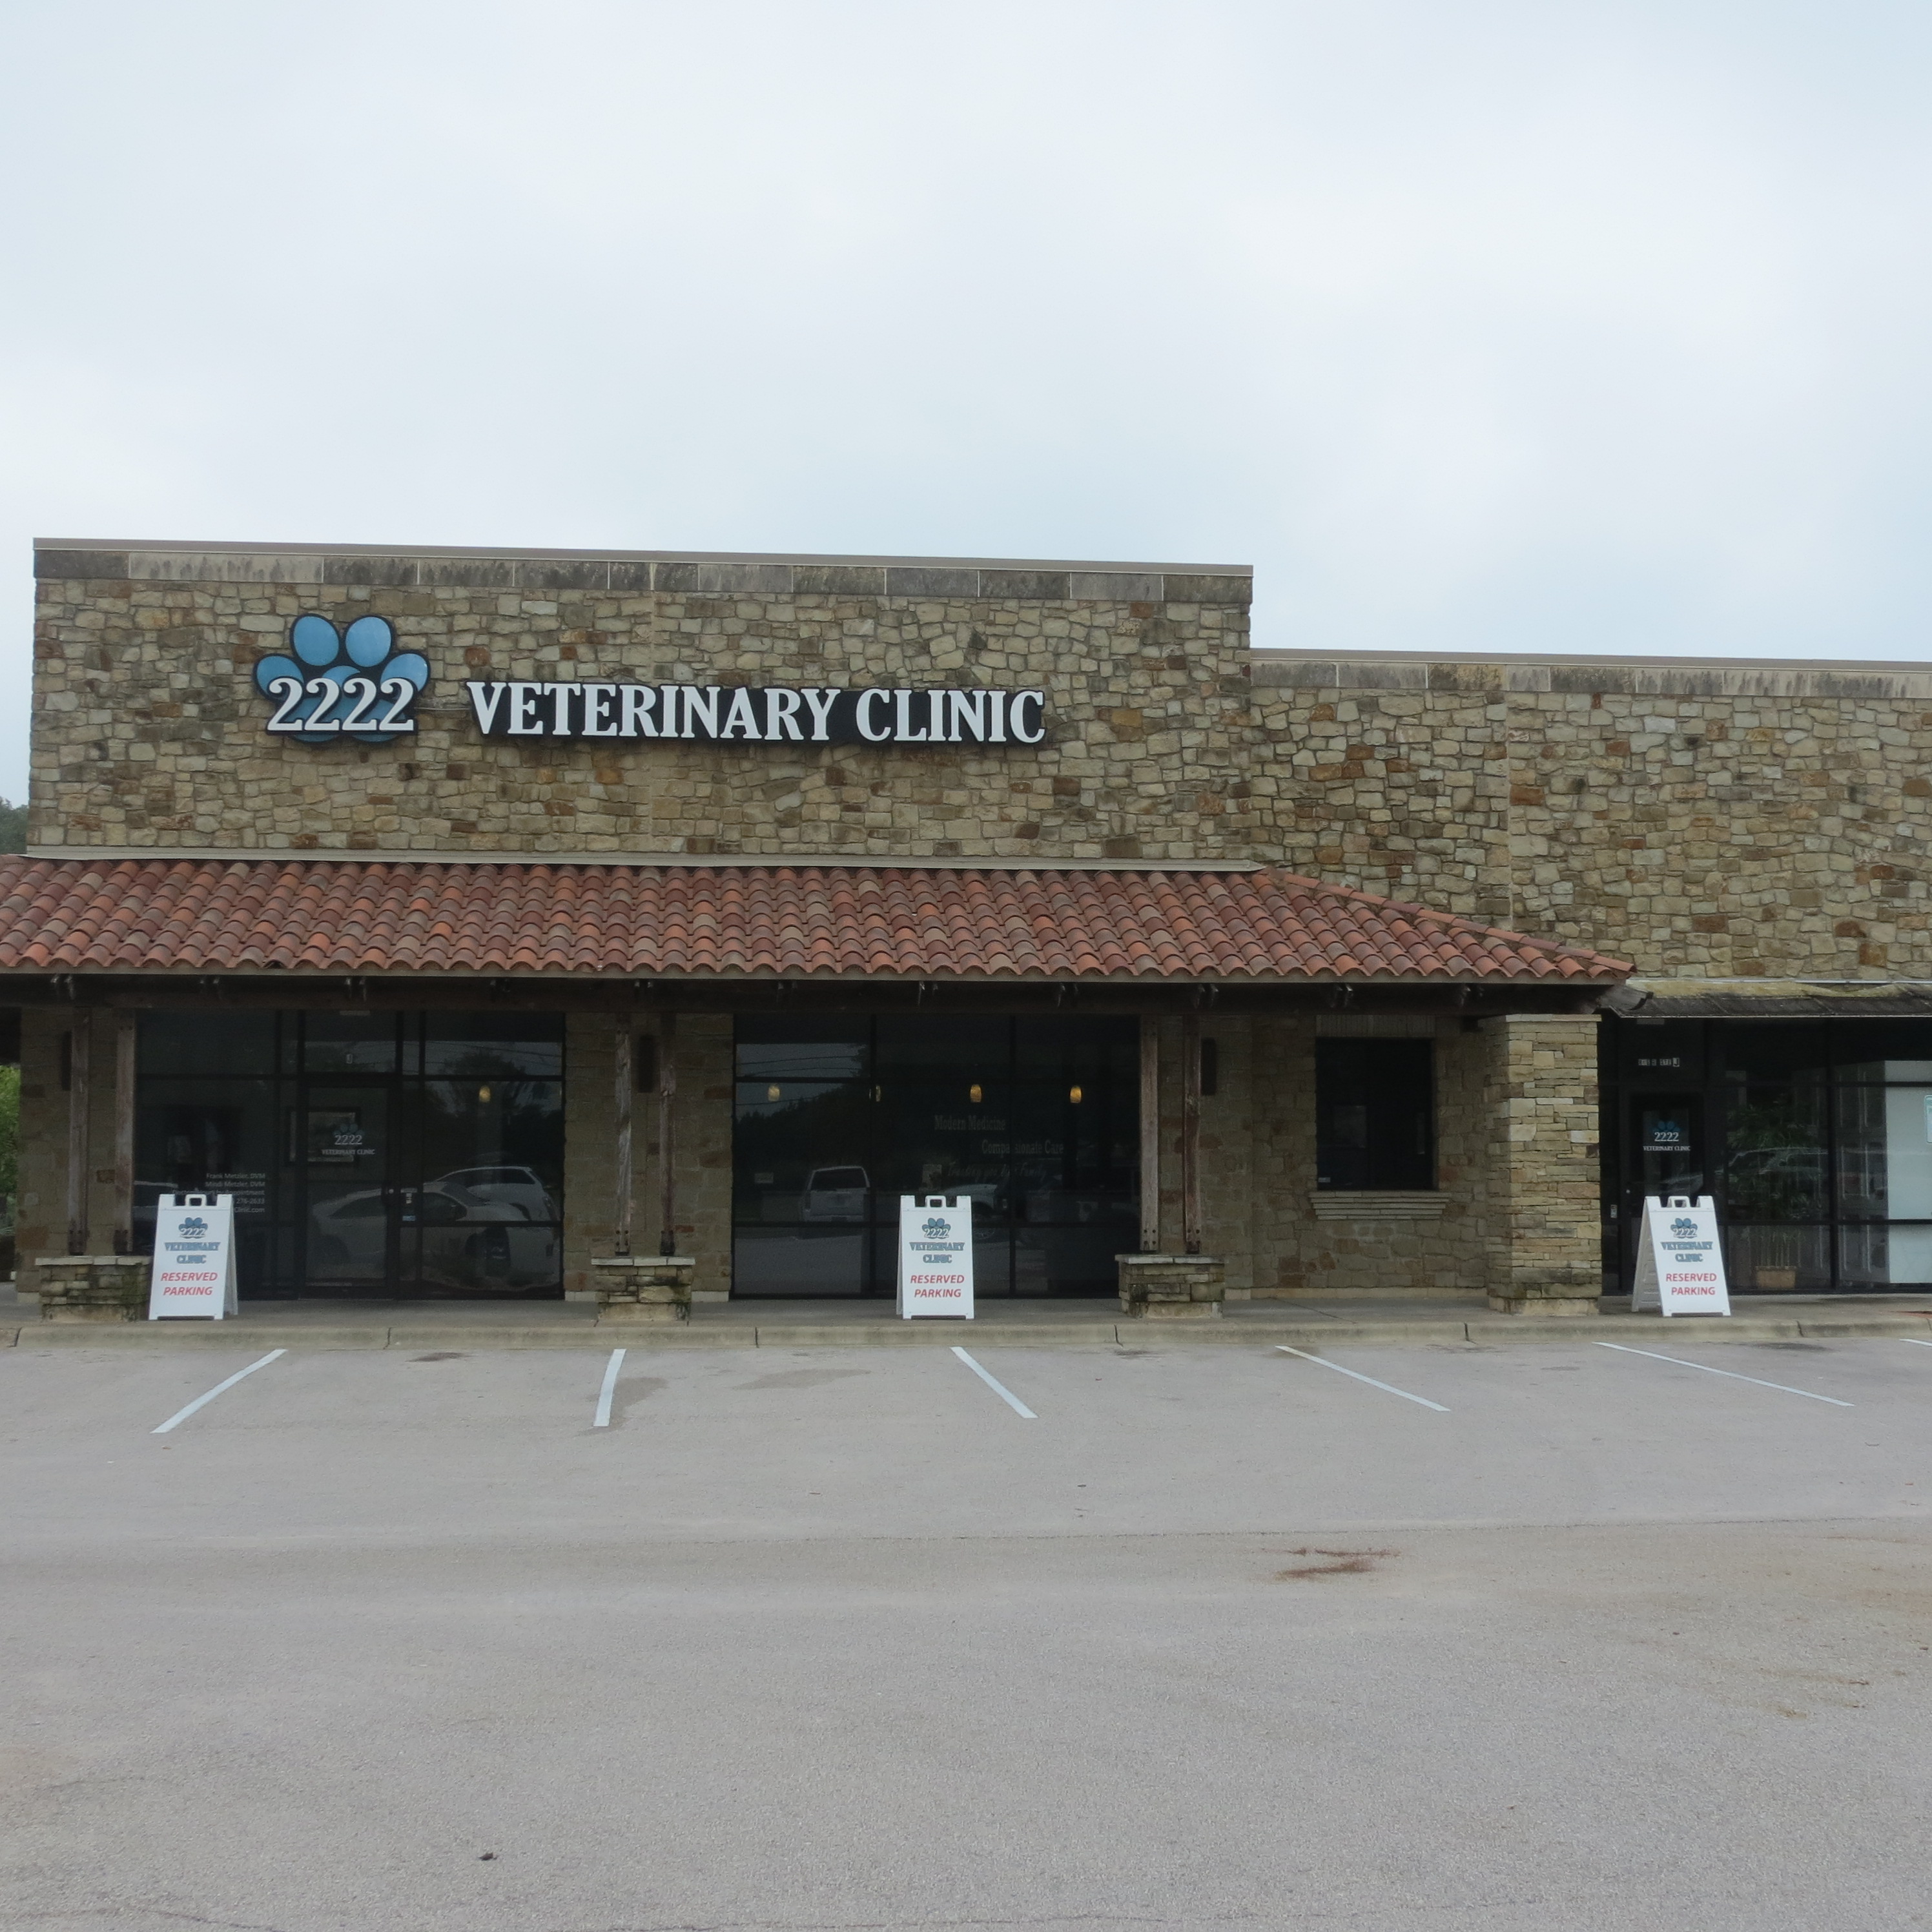 Gallery Veterinarian in Austin, TX 2222 Veterinary Clinic